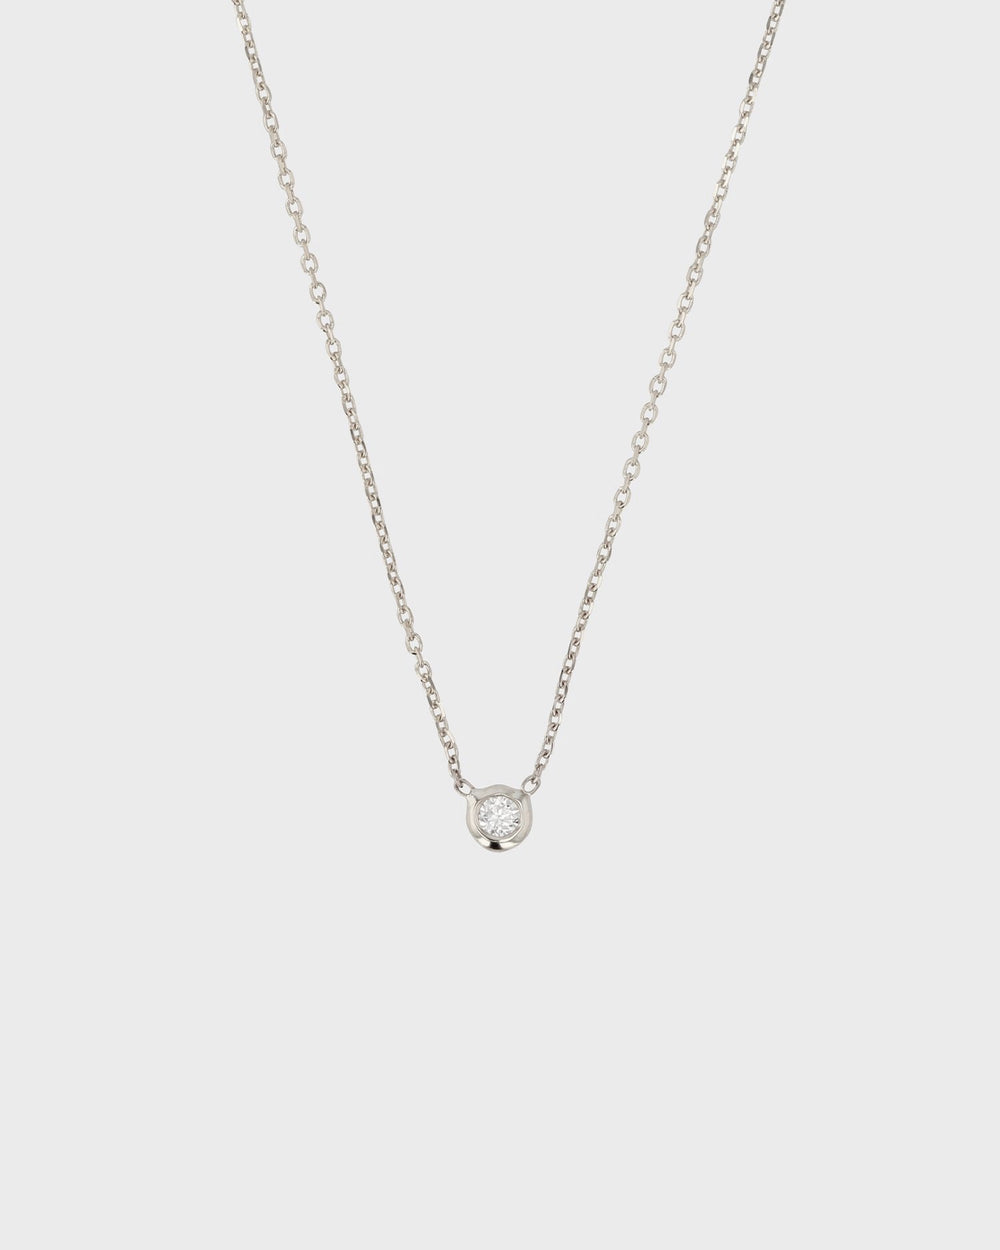 Lunette Pendant Necklace White Gold | Sarah & Sebastian